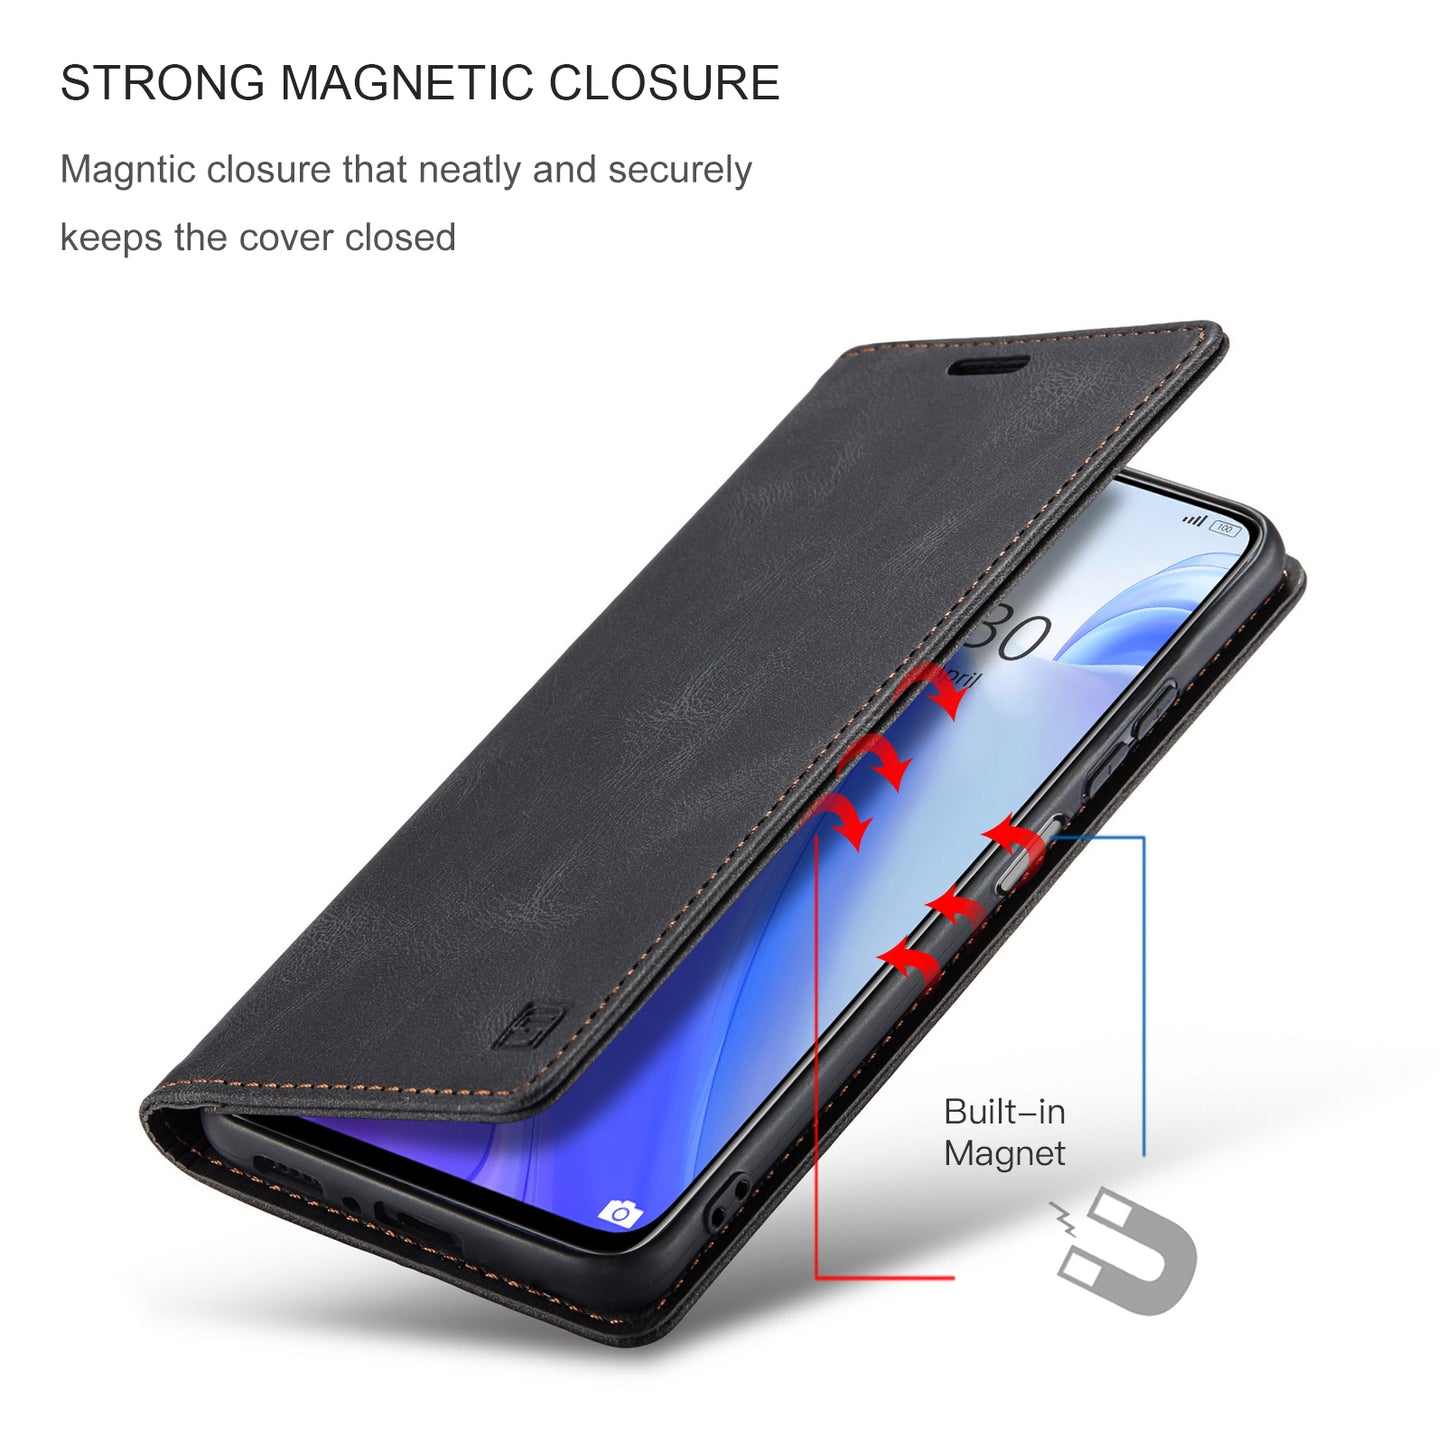 AutoSpace Wallet Leather Case for Xiaomi/Redmi